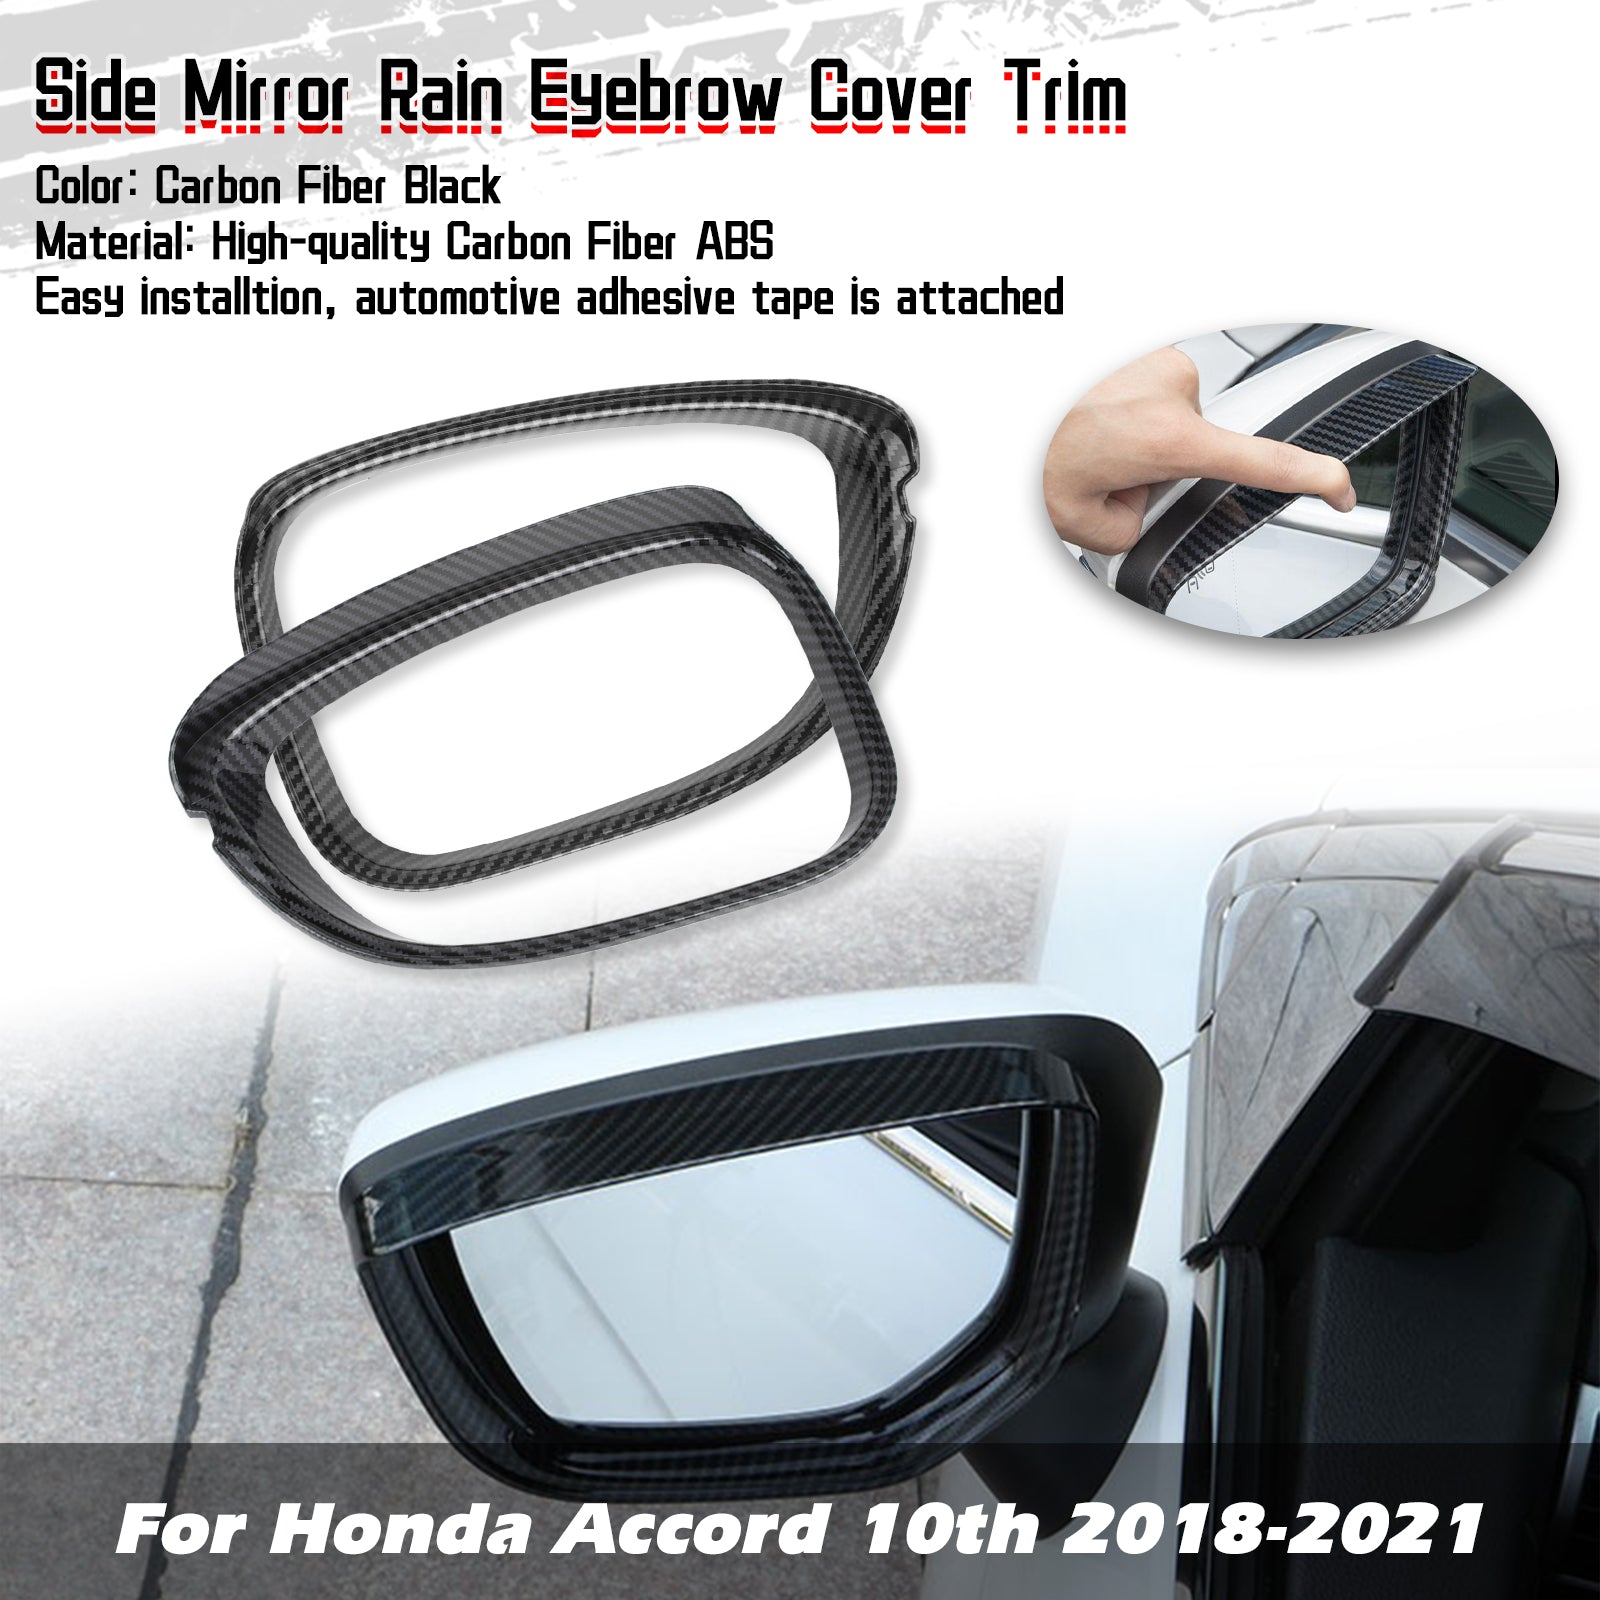 Carbon Fiber Look Side Mirror Eyebrow Cover Trim For Honda Accord